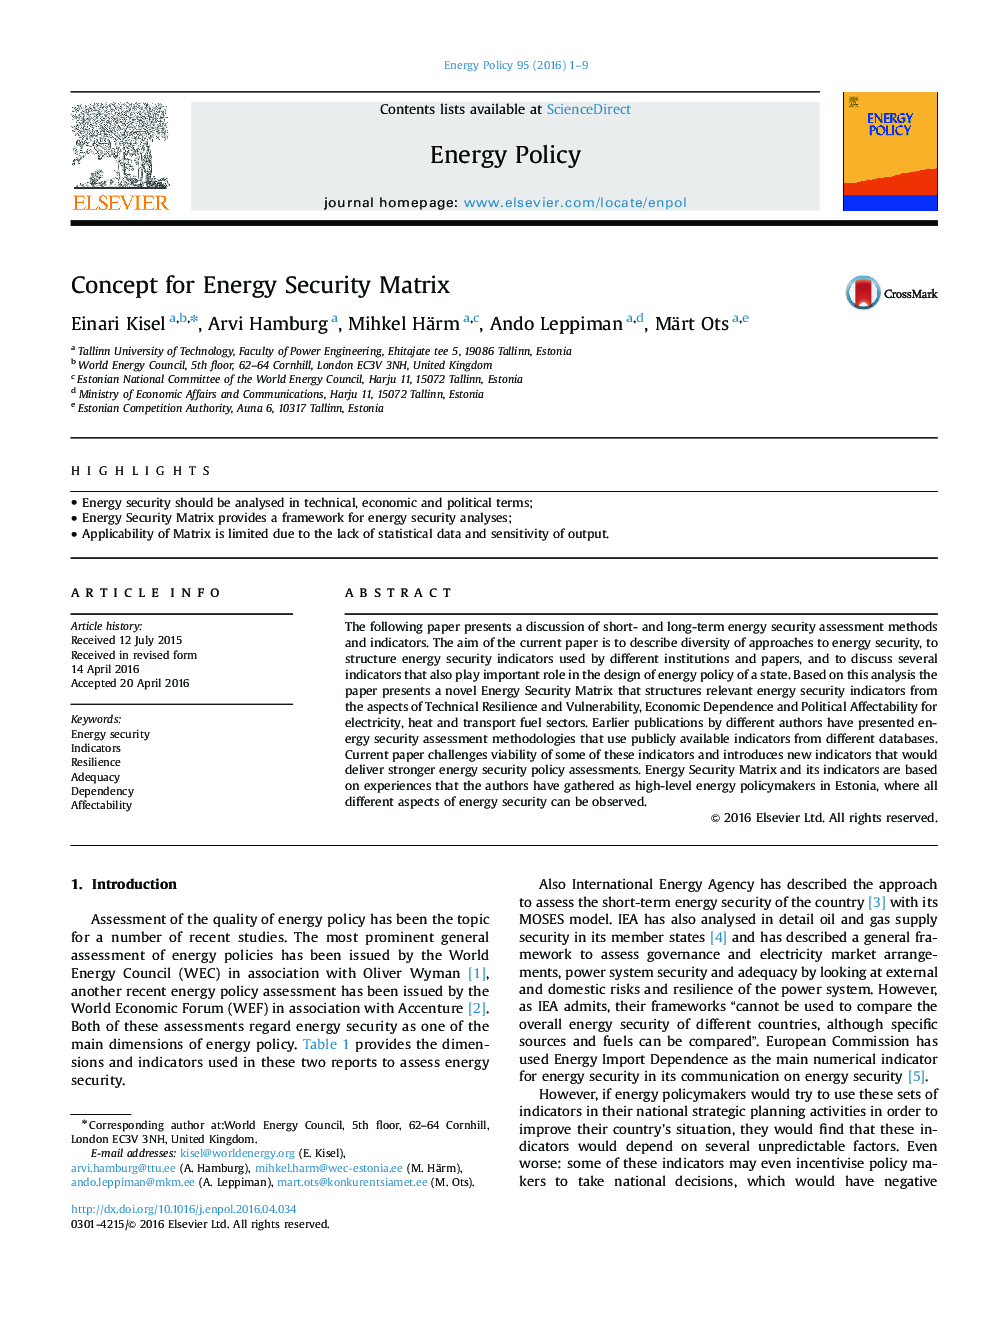 مفهوم ماتریس امنیت انرژی 